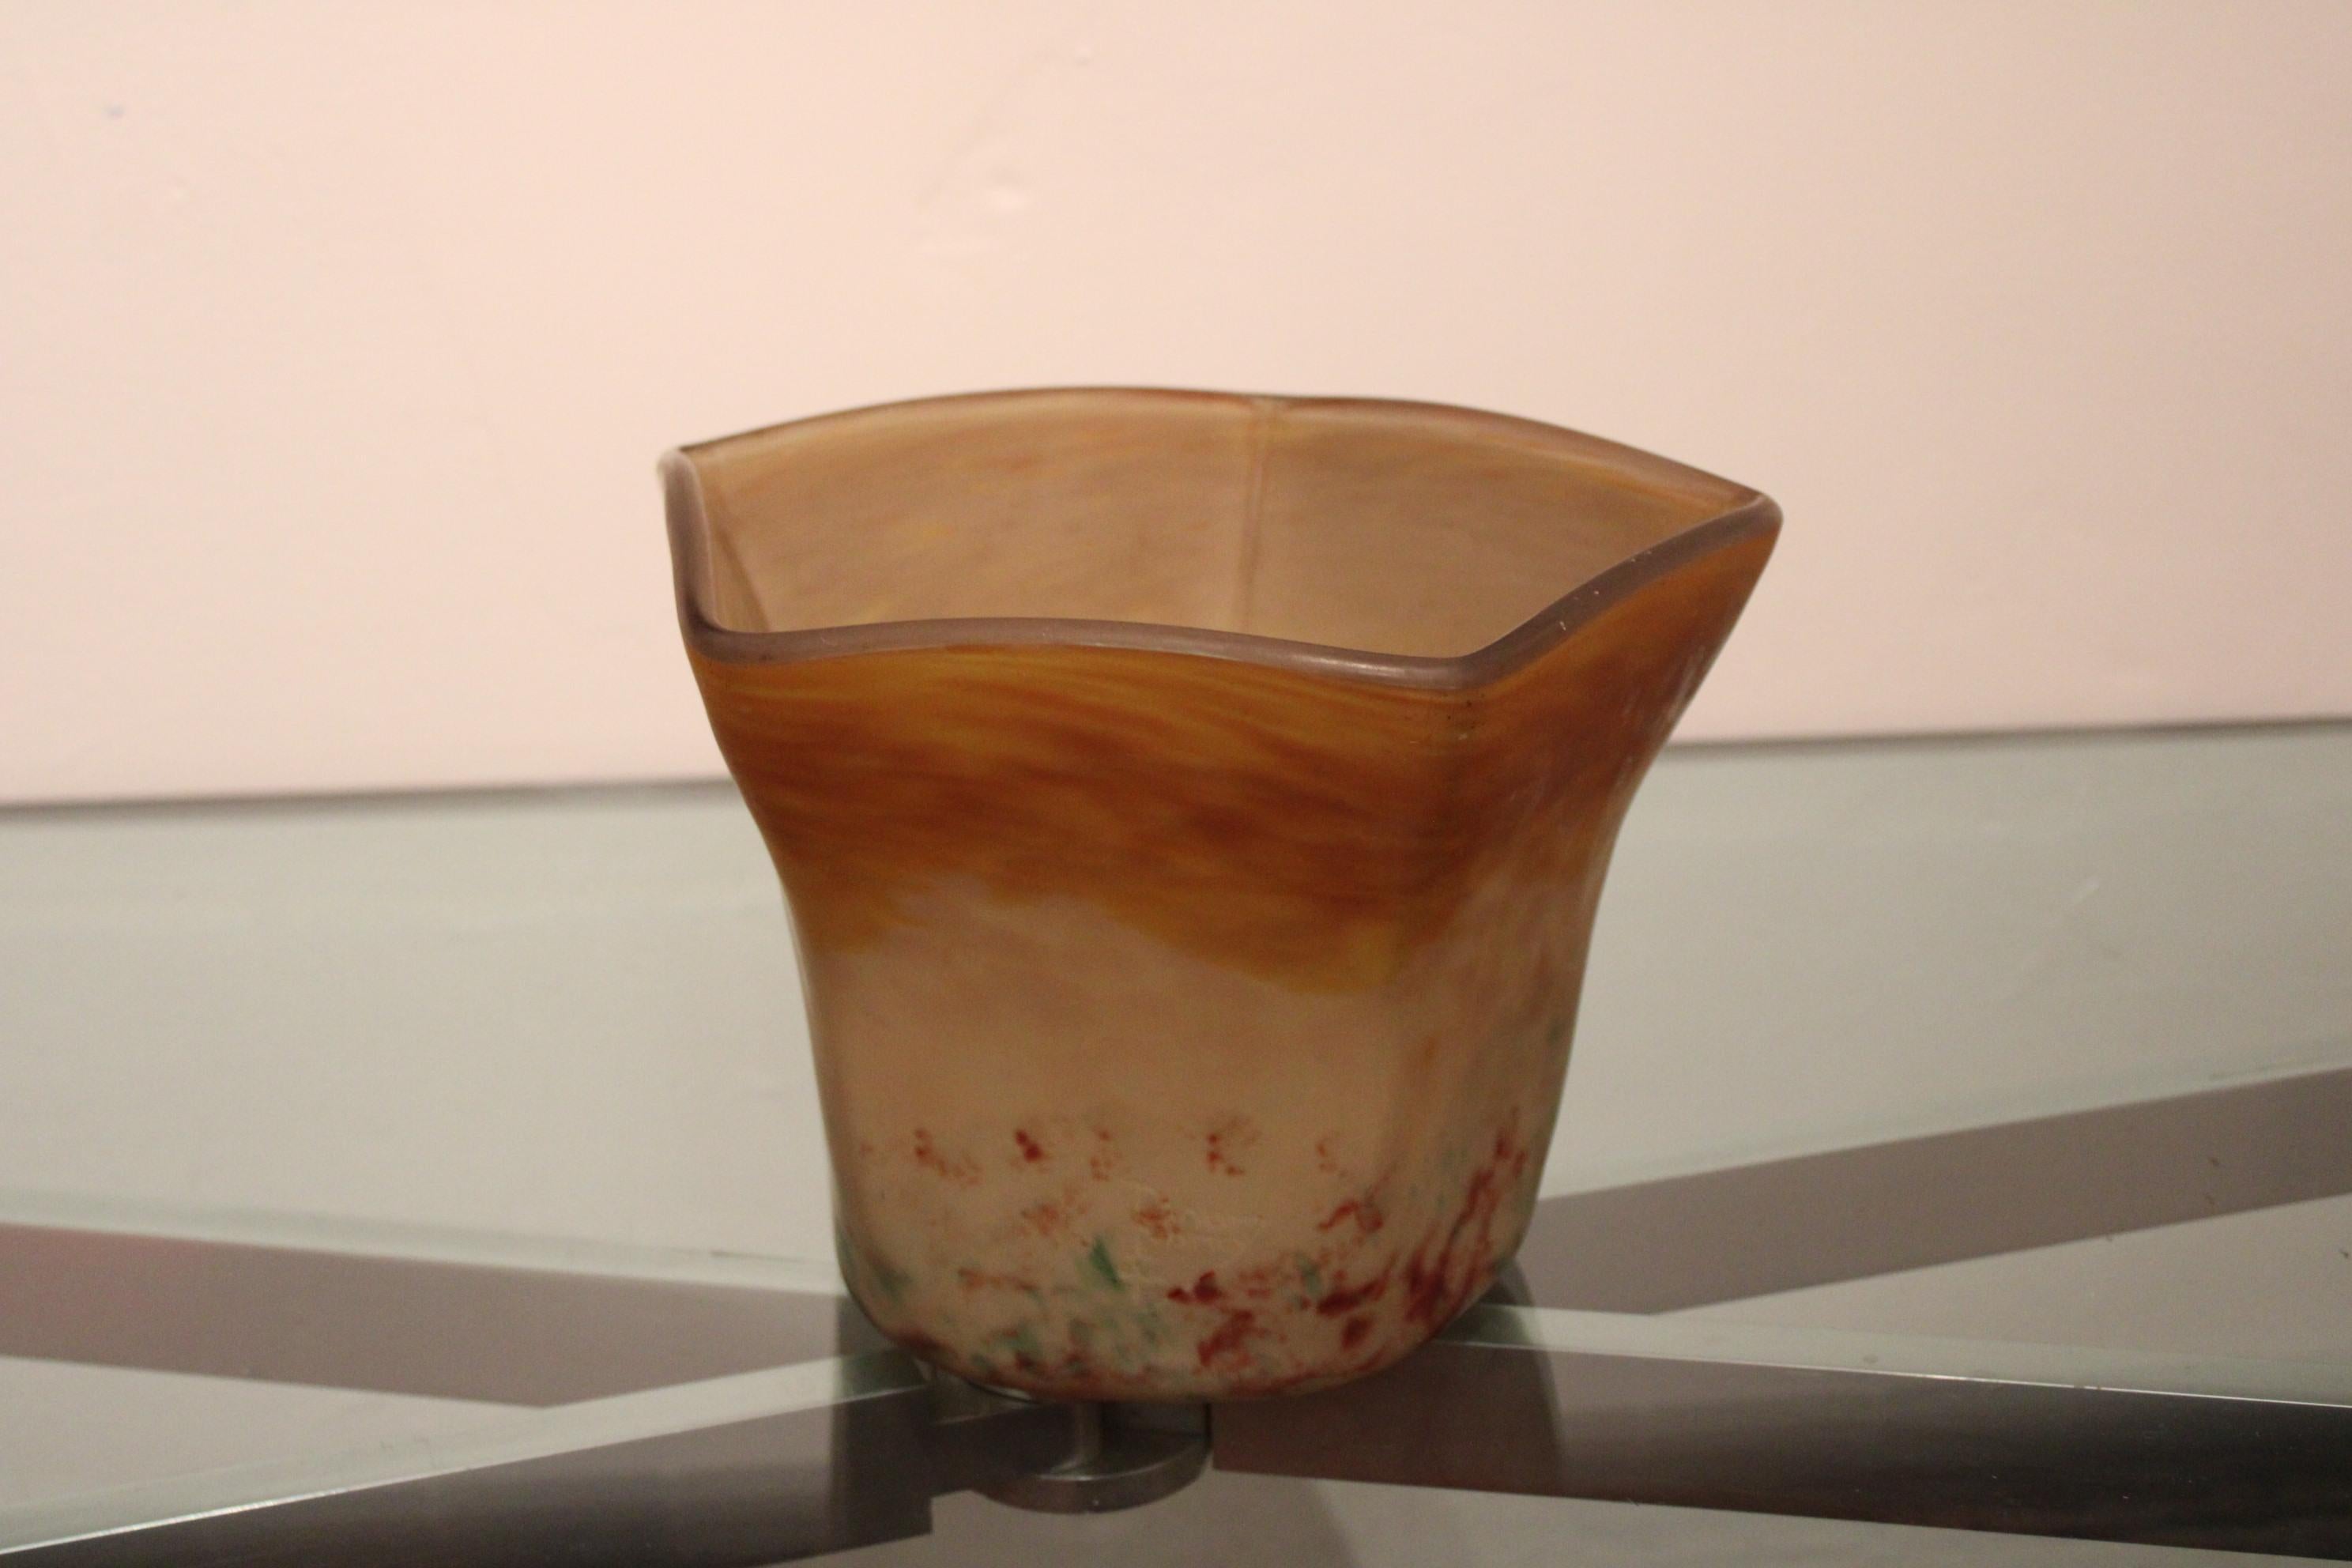 Daum glass vase
Pentagon shape
Signed DAUM NANCY.